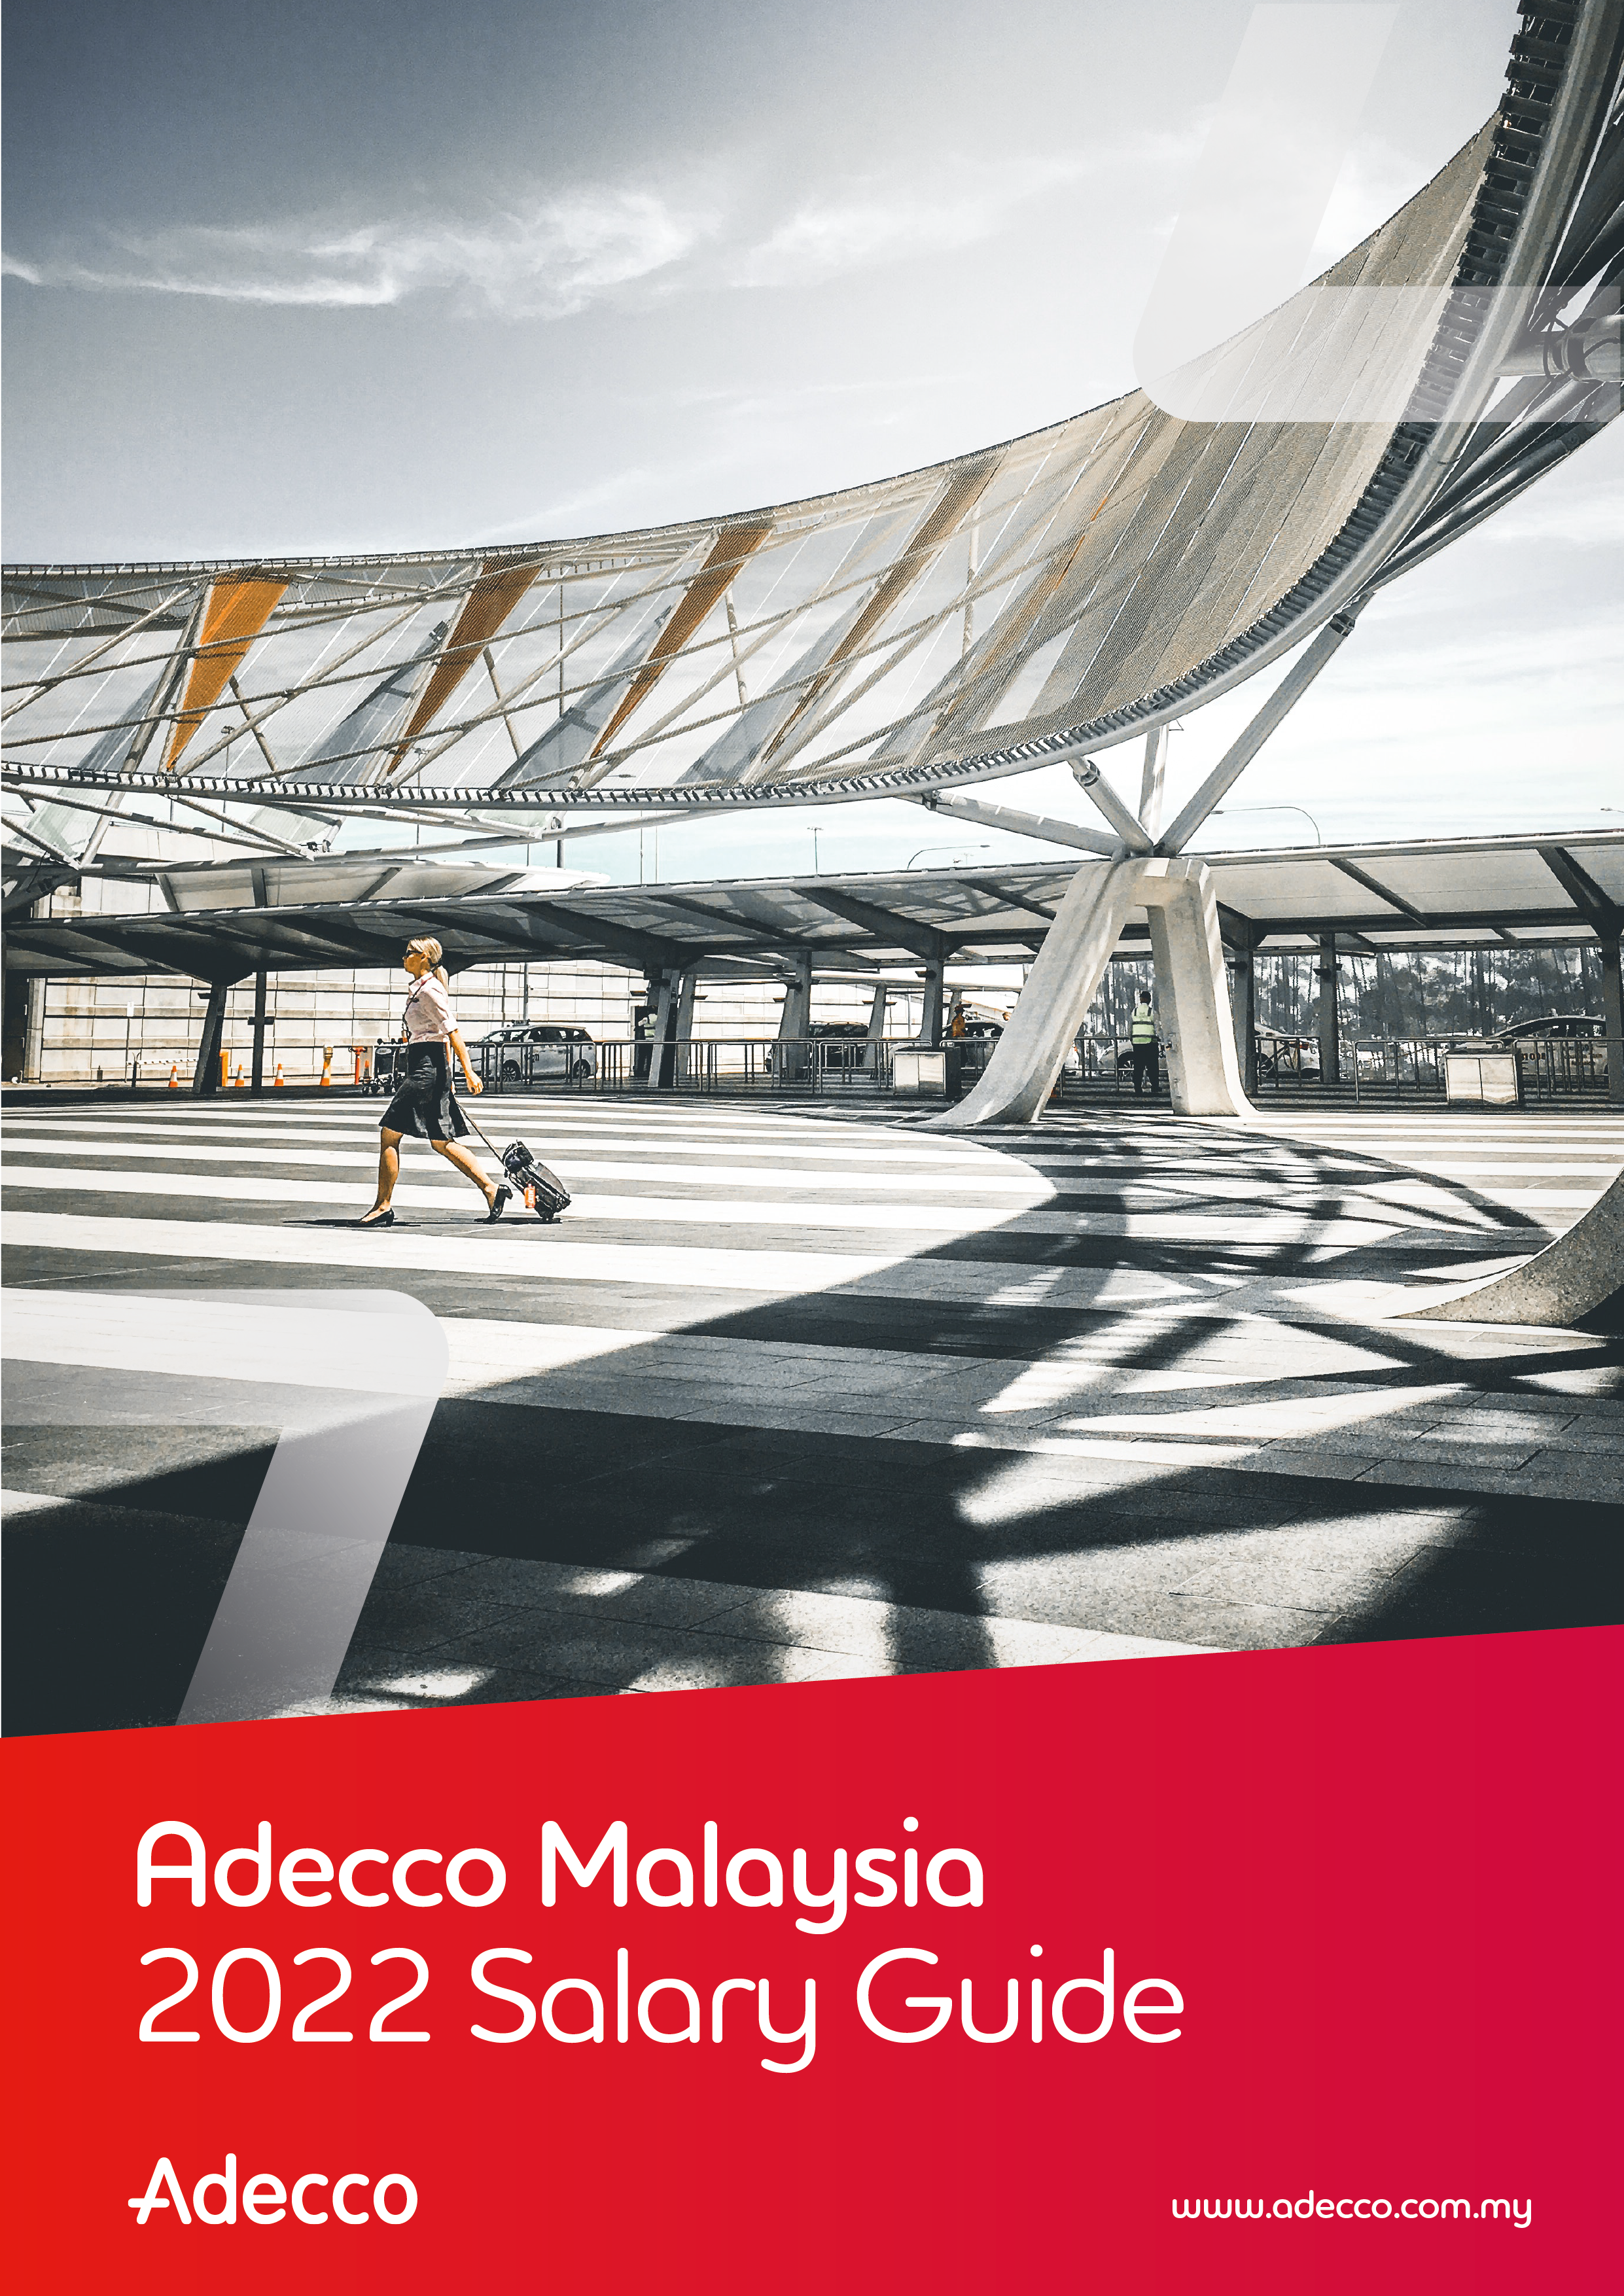 Adecco Malaysia 2022 Salary Guide